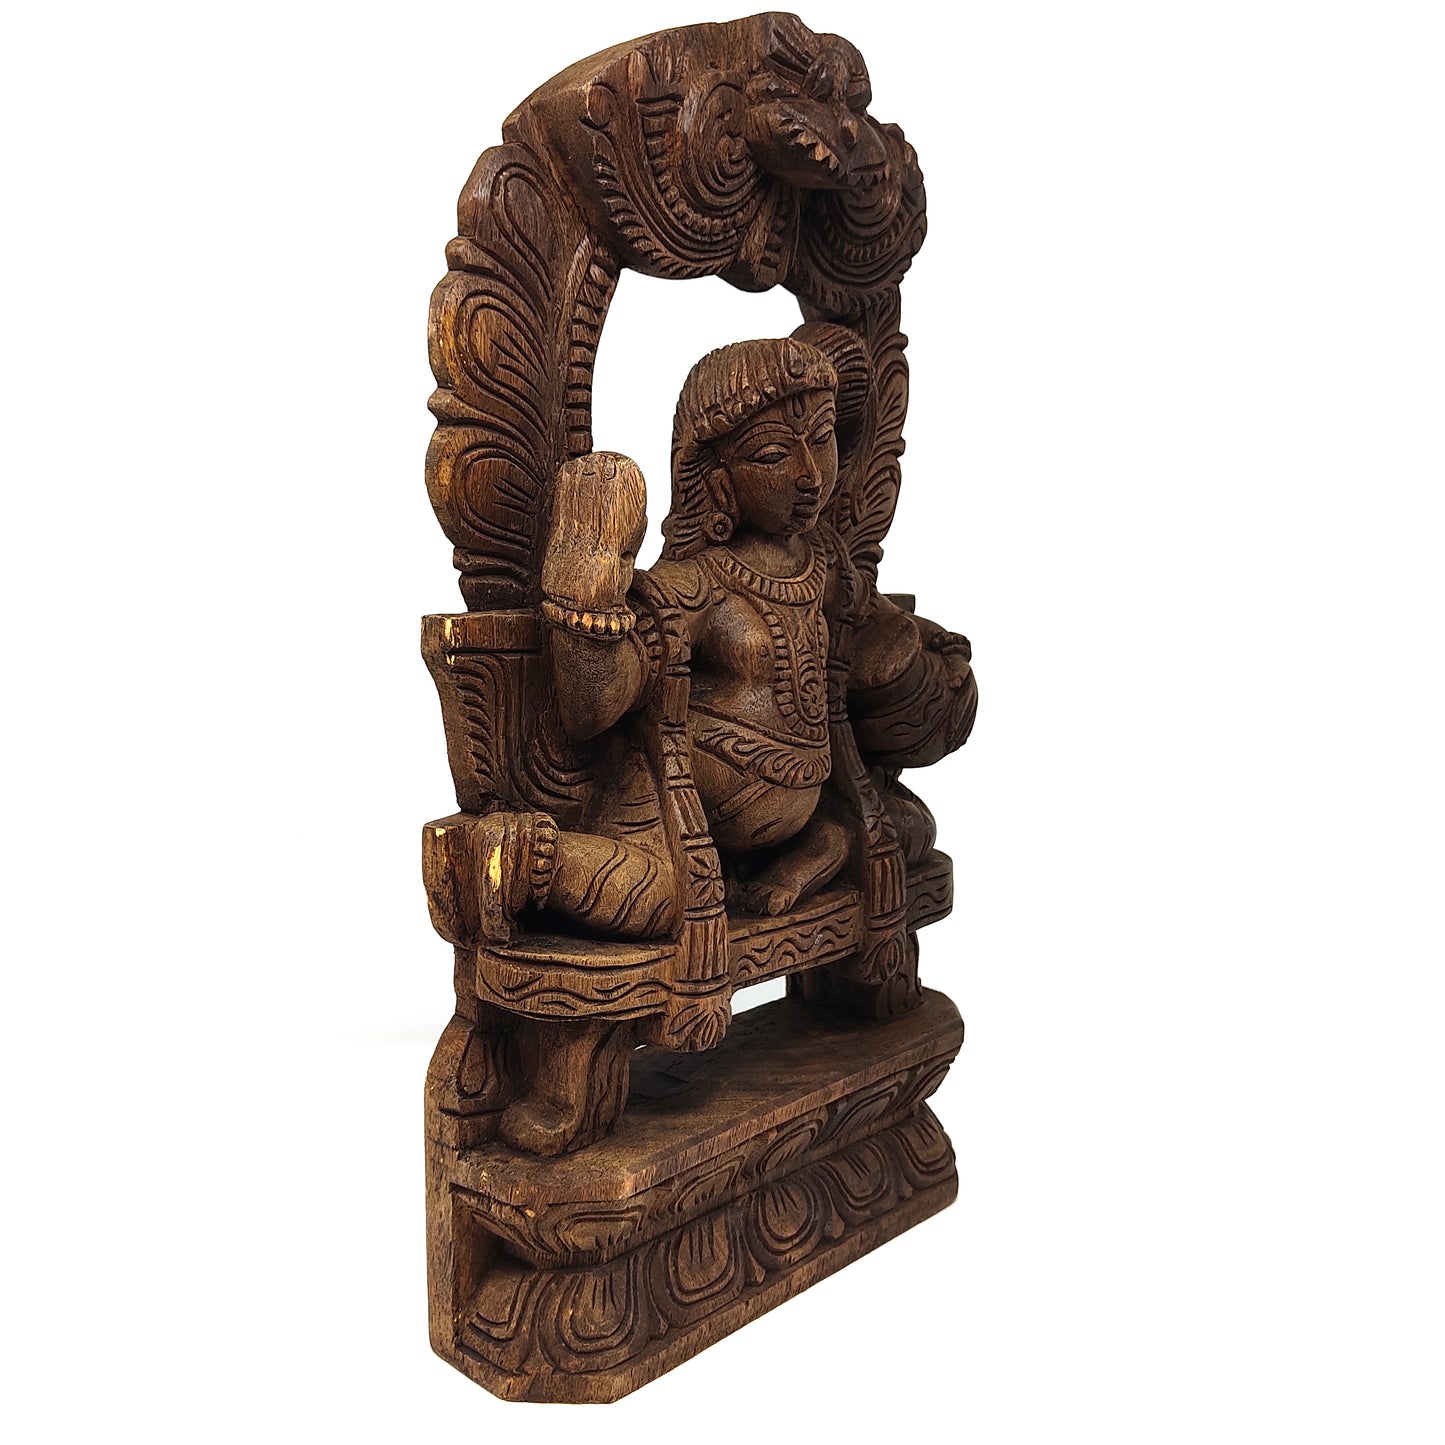 Wooden Bal Krishna Carving | Krishna Wall Hanging Plaque Handmade Carving 18"